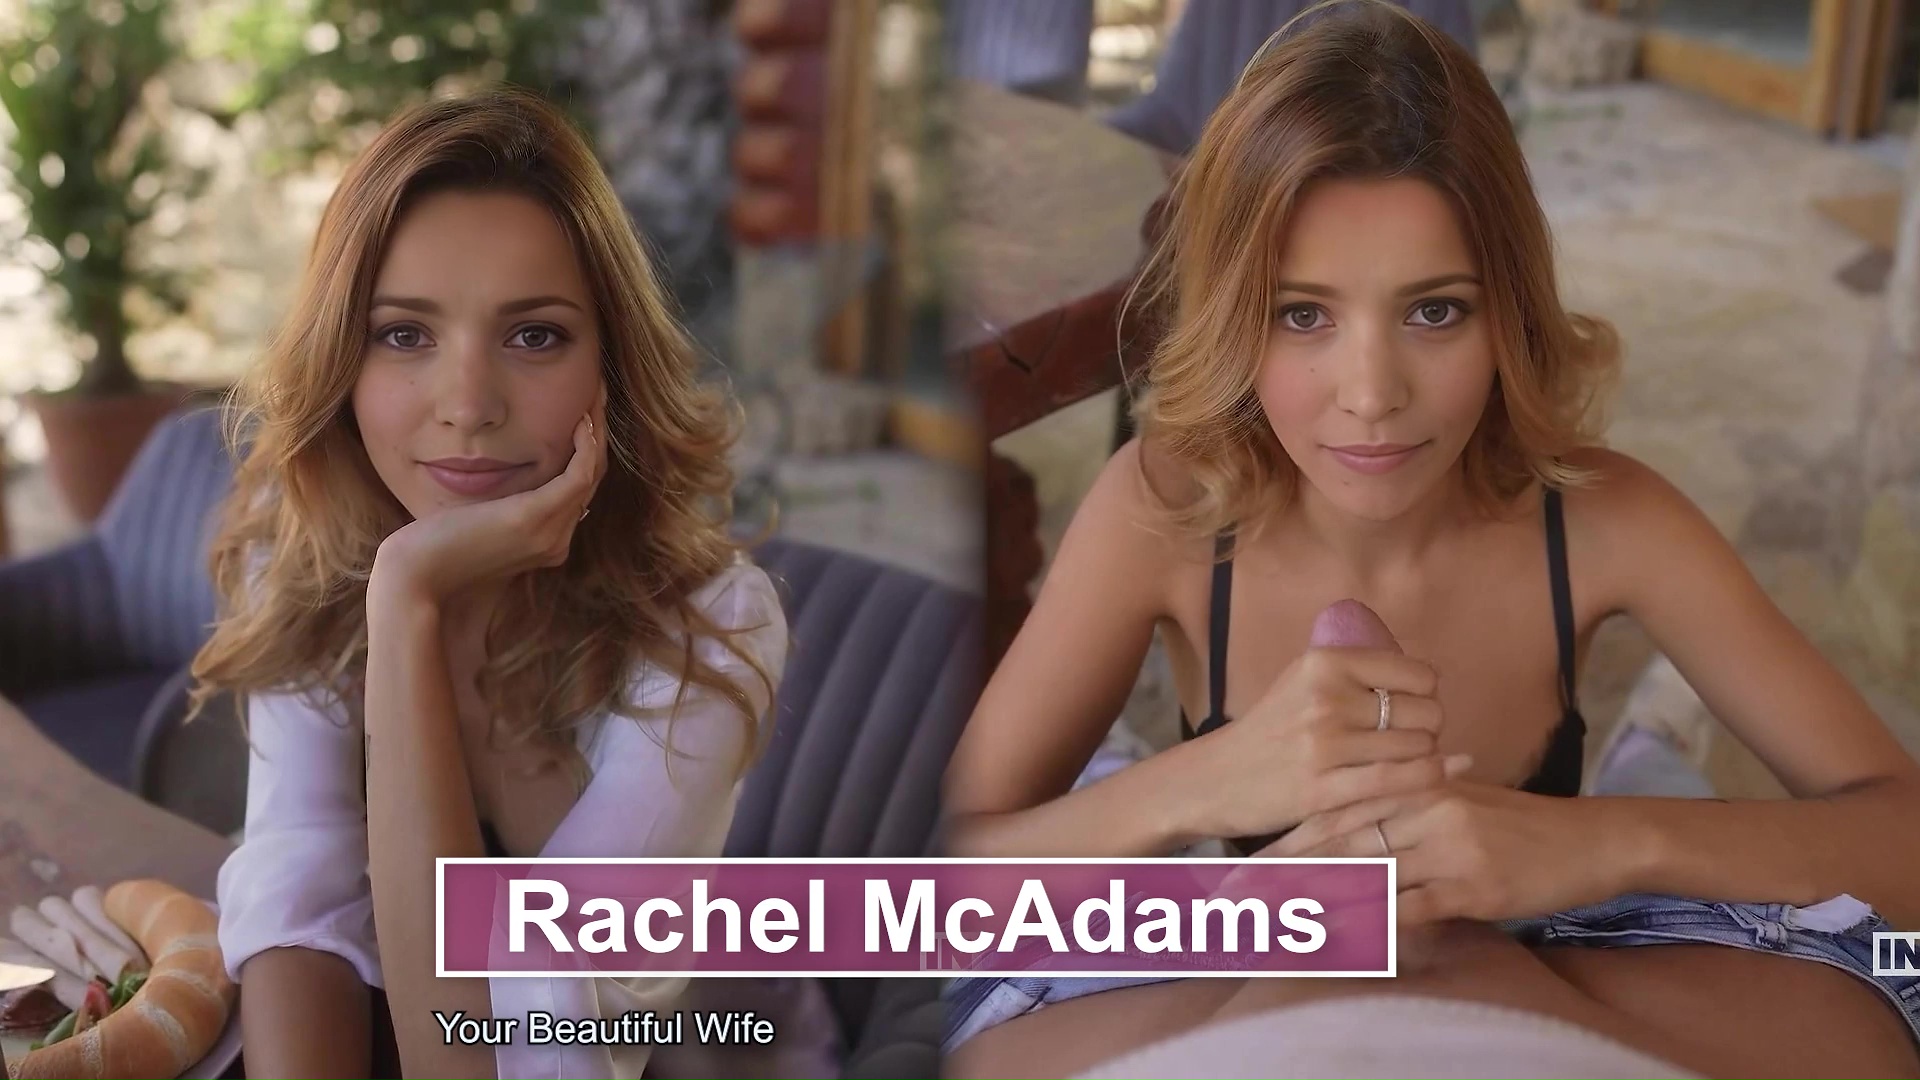 Rachel McAdams - Your Beautiful Wife - Trailer